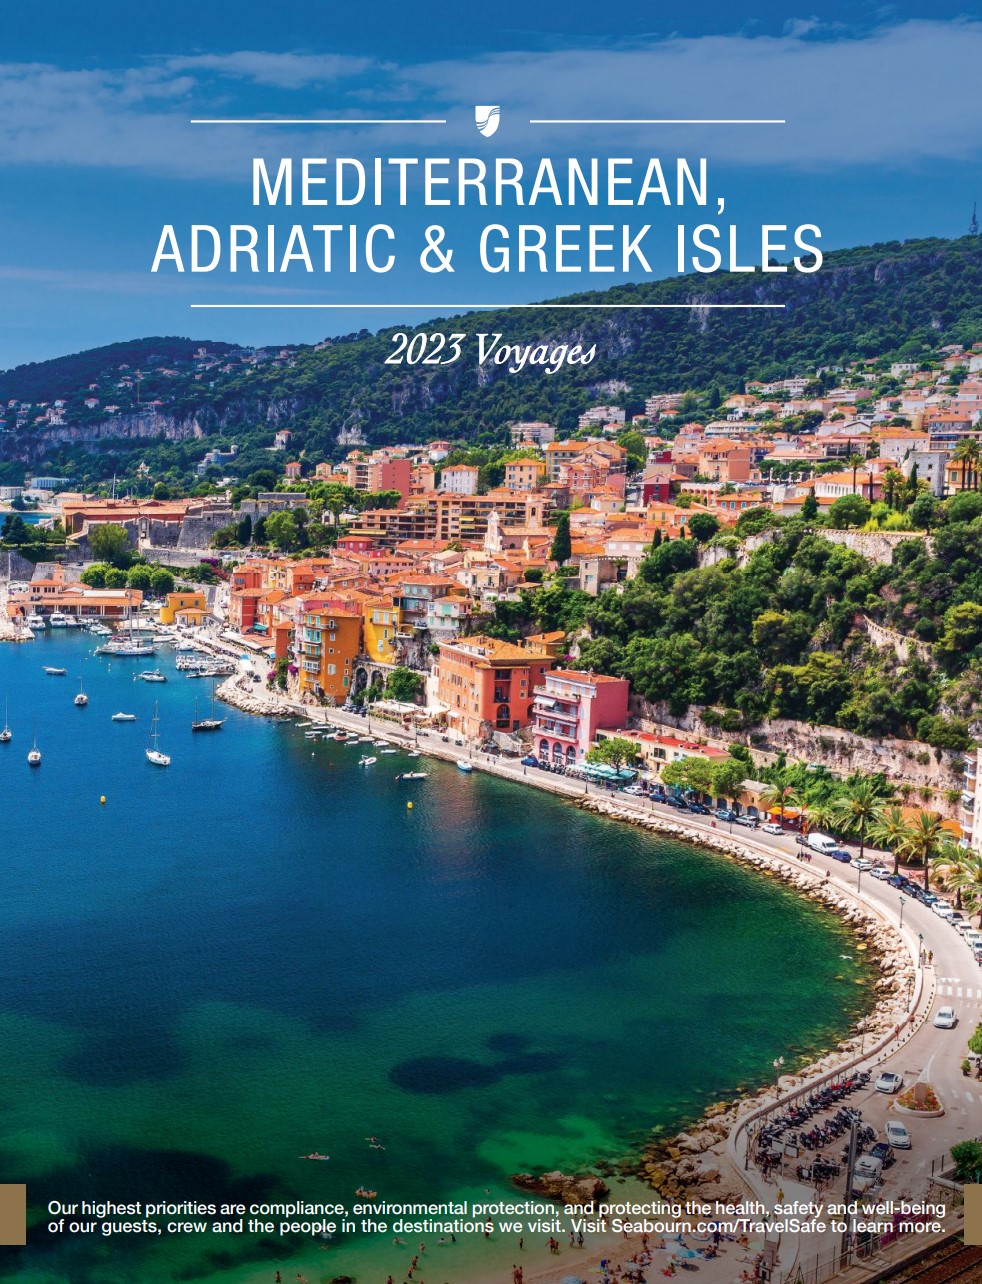 Brosura - Seabourn Mediterranean, Adriatic & Greek Isles 2023